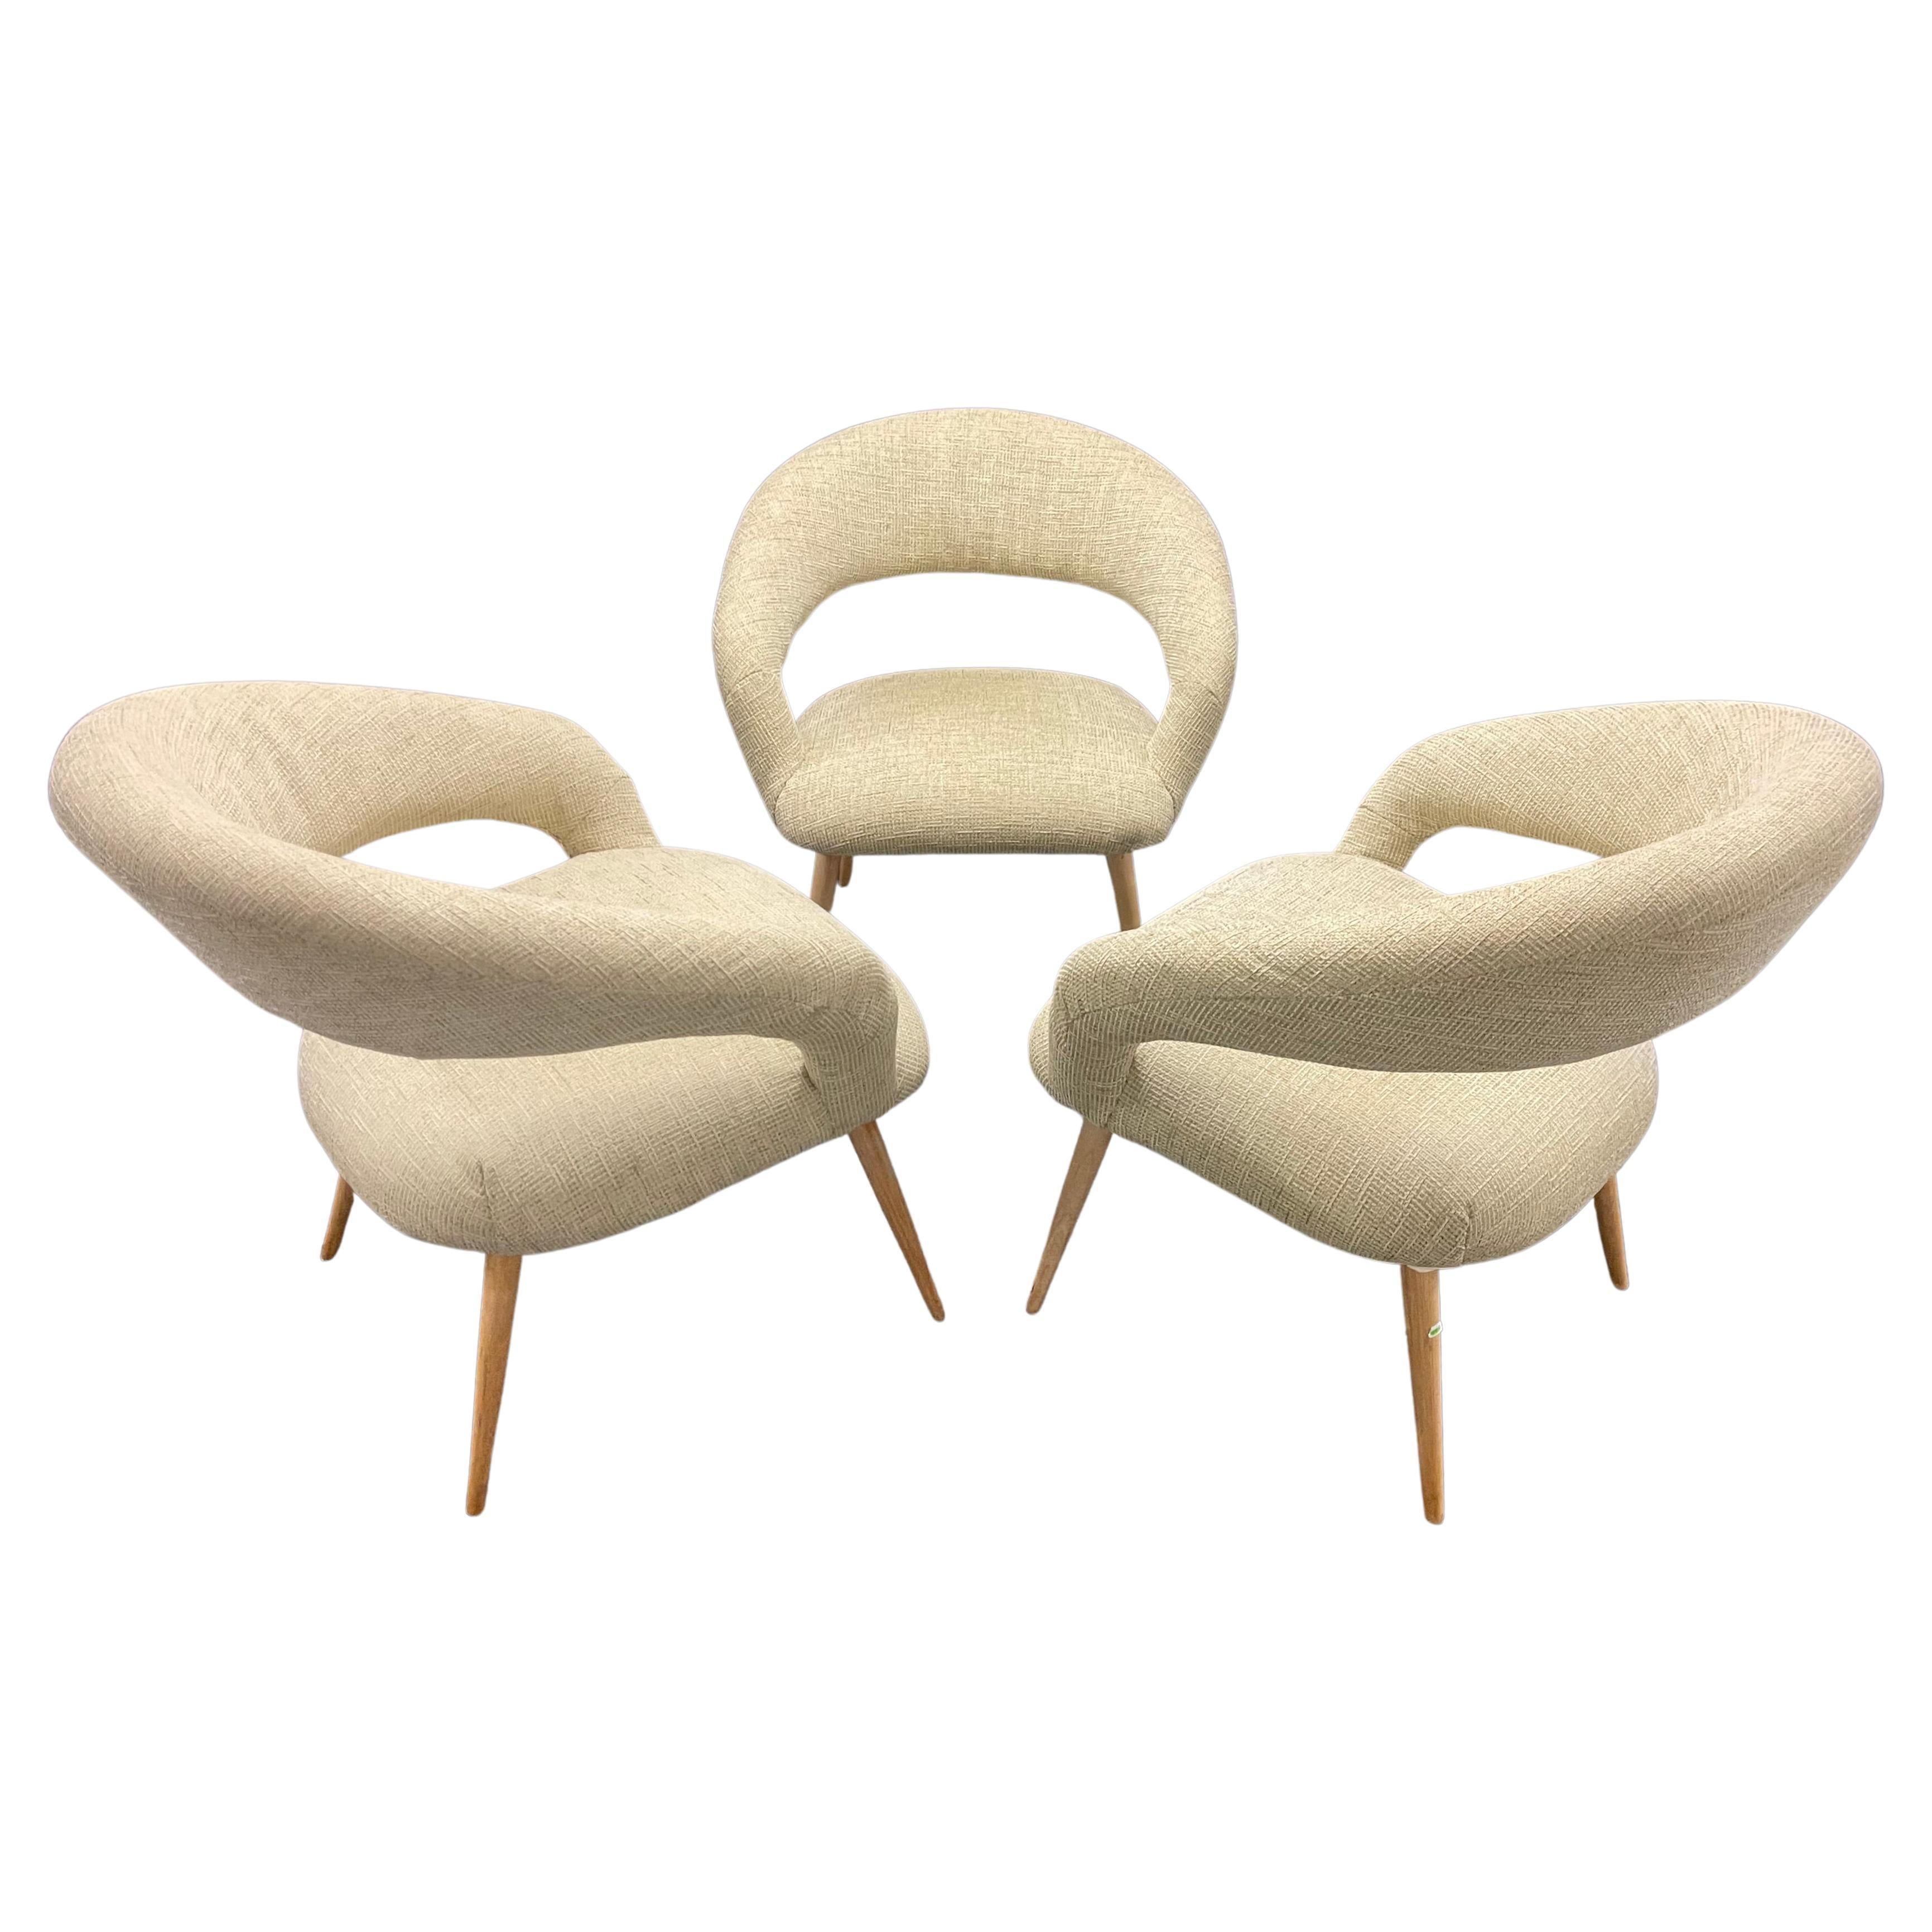 wonderful set of 3 elegant lounge chairs